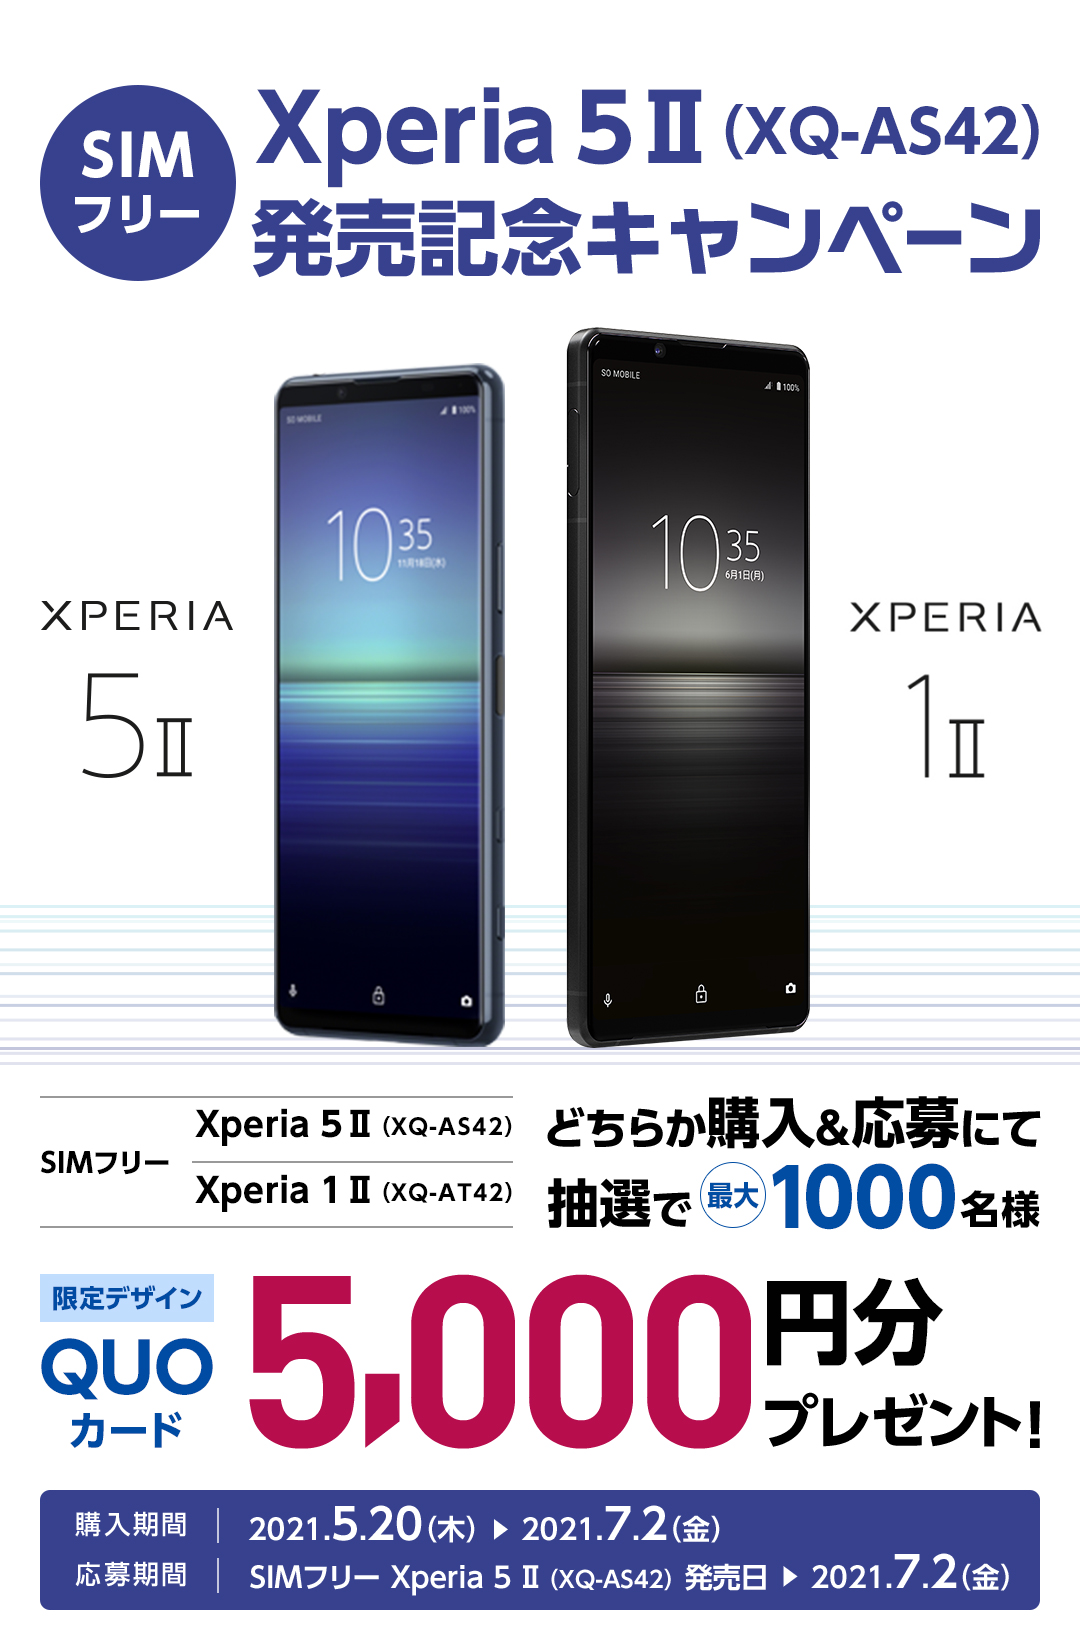 SIMフリー Xperia 5 II 発売記念キャンペーン